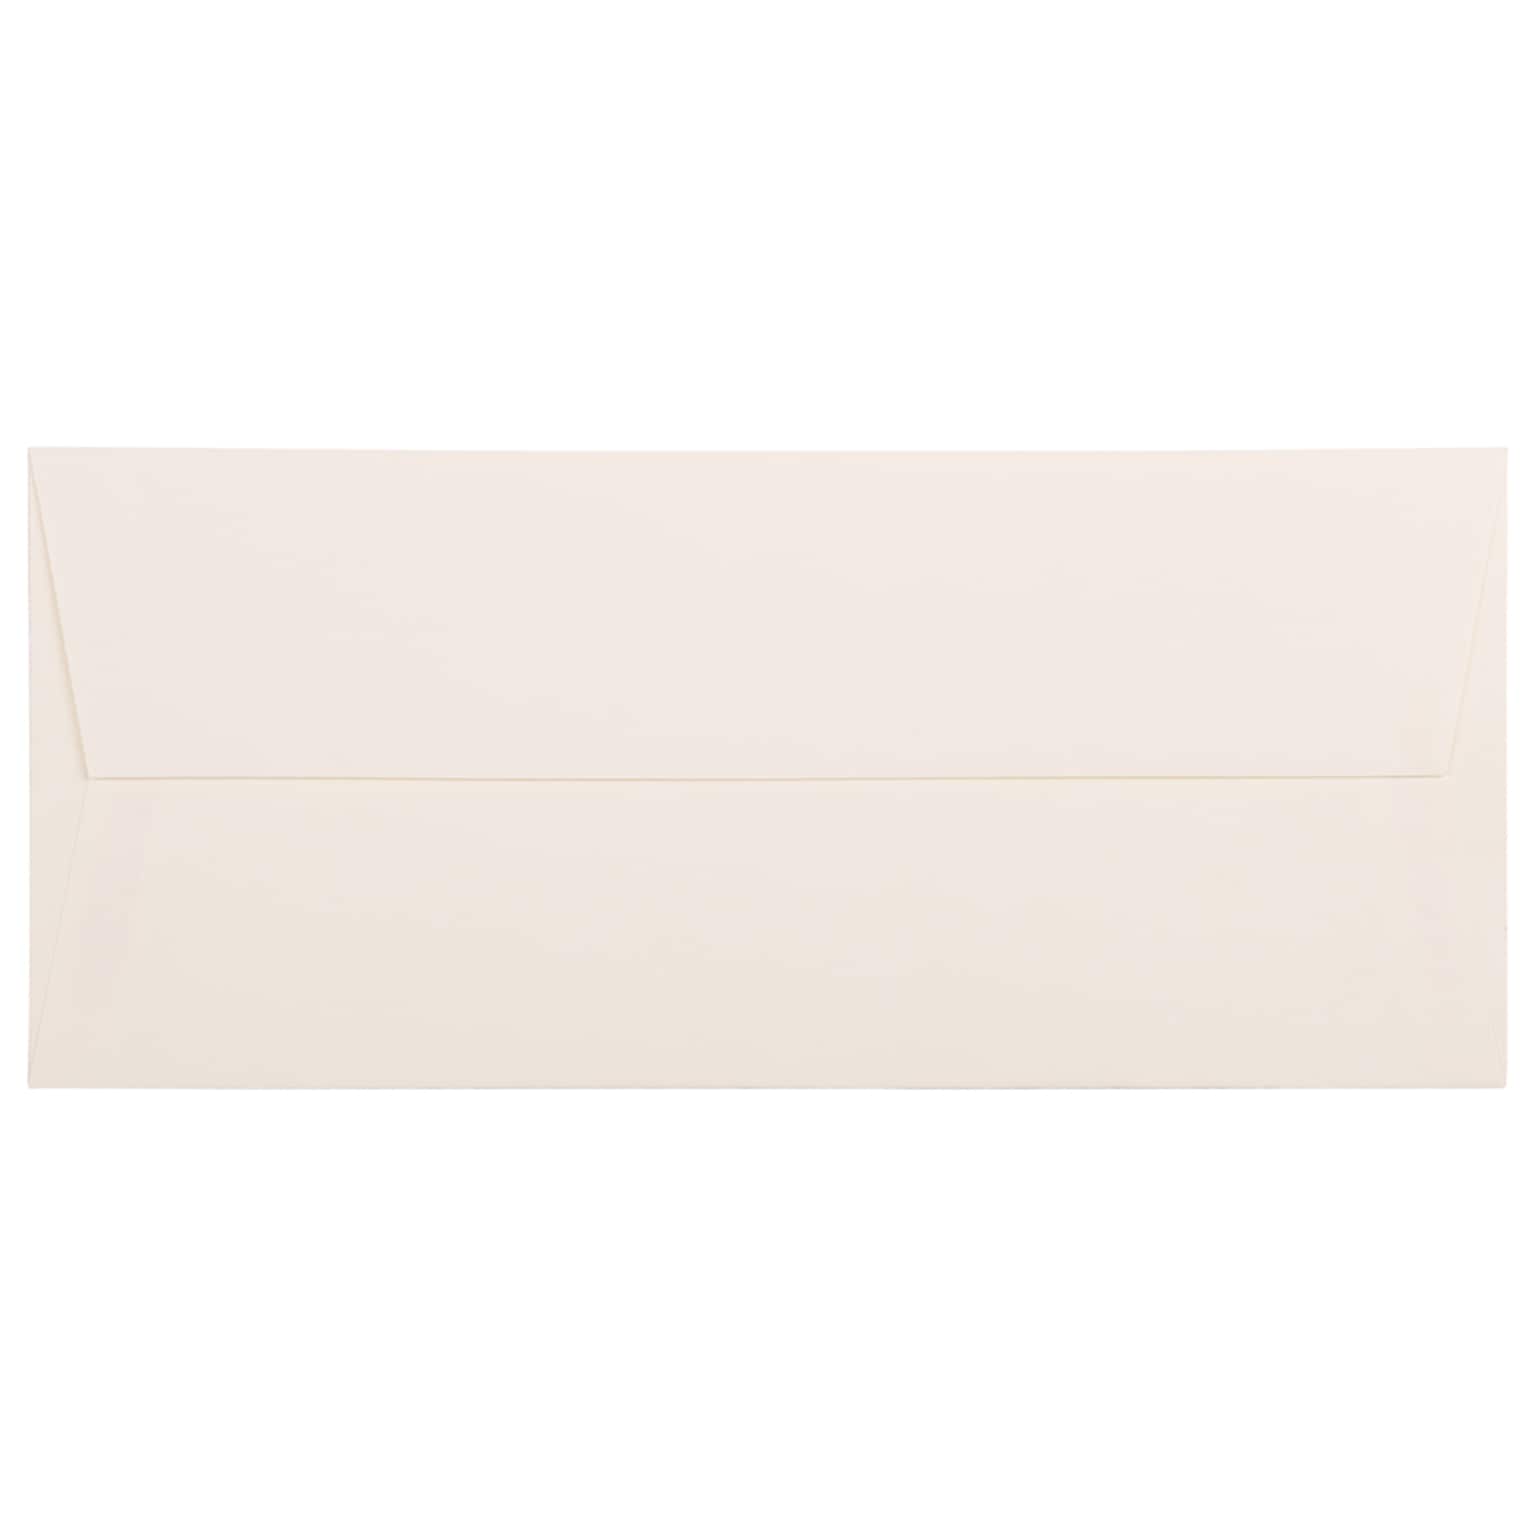 JAM Paper Strathmore #10 Business Envelope, 4 1/8 x 9 1/2, Natural White Wove, 25/Pack (34992)